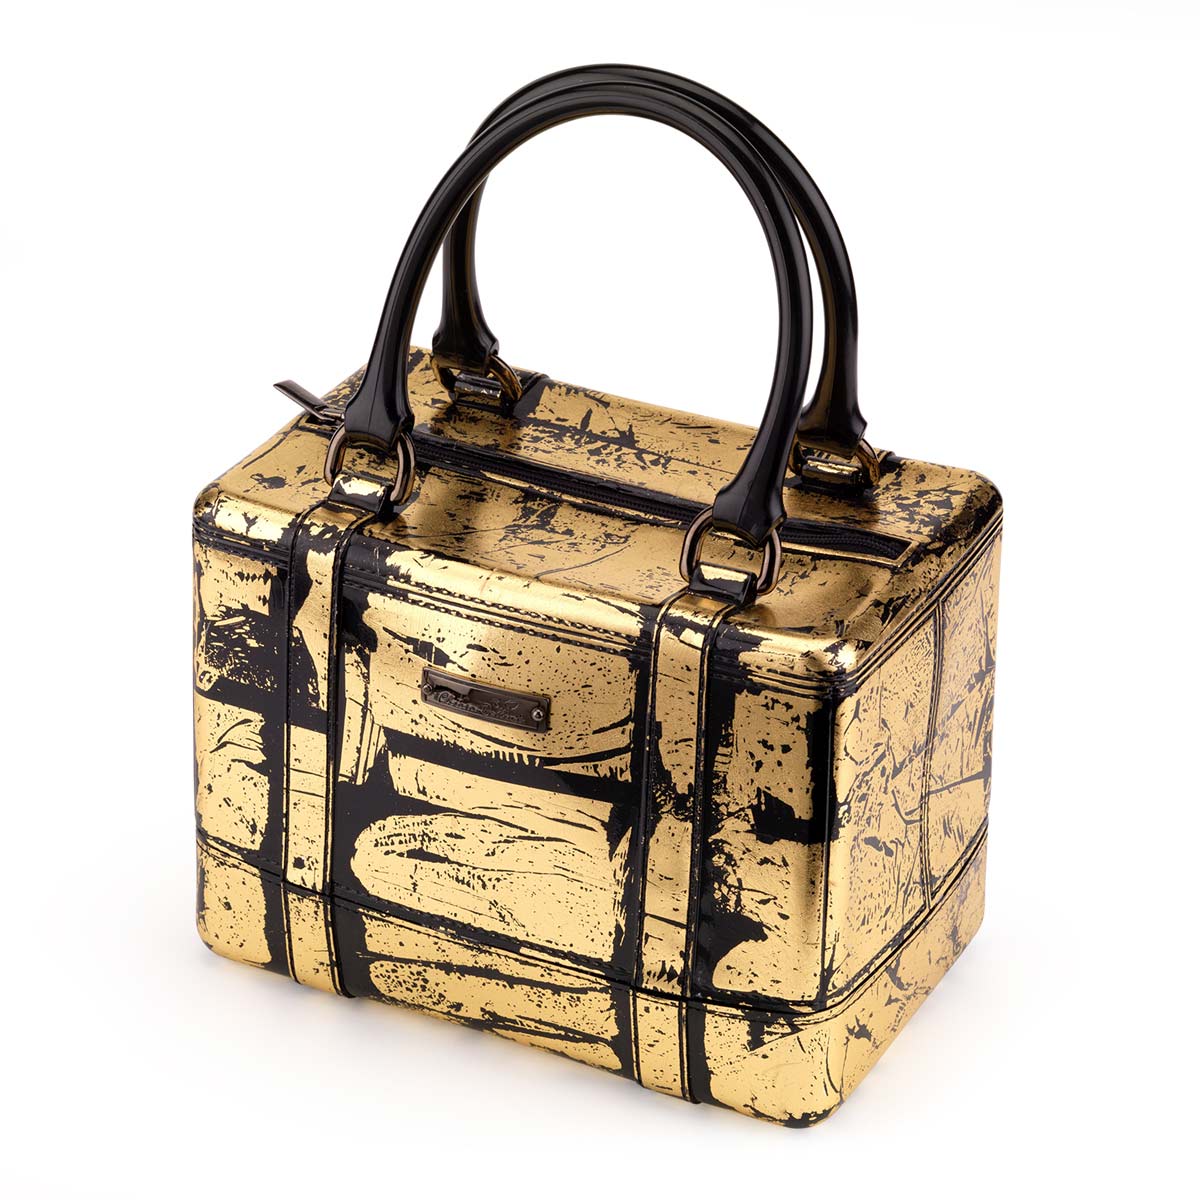 Satchel handbag in PVC, gold plated